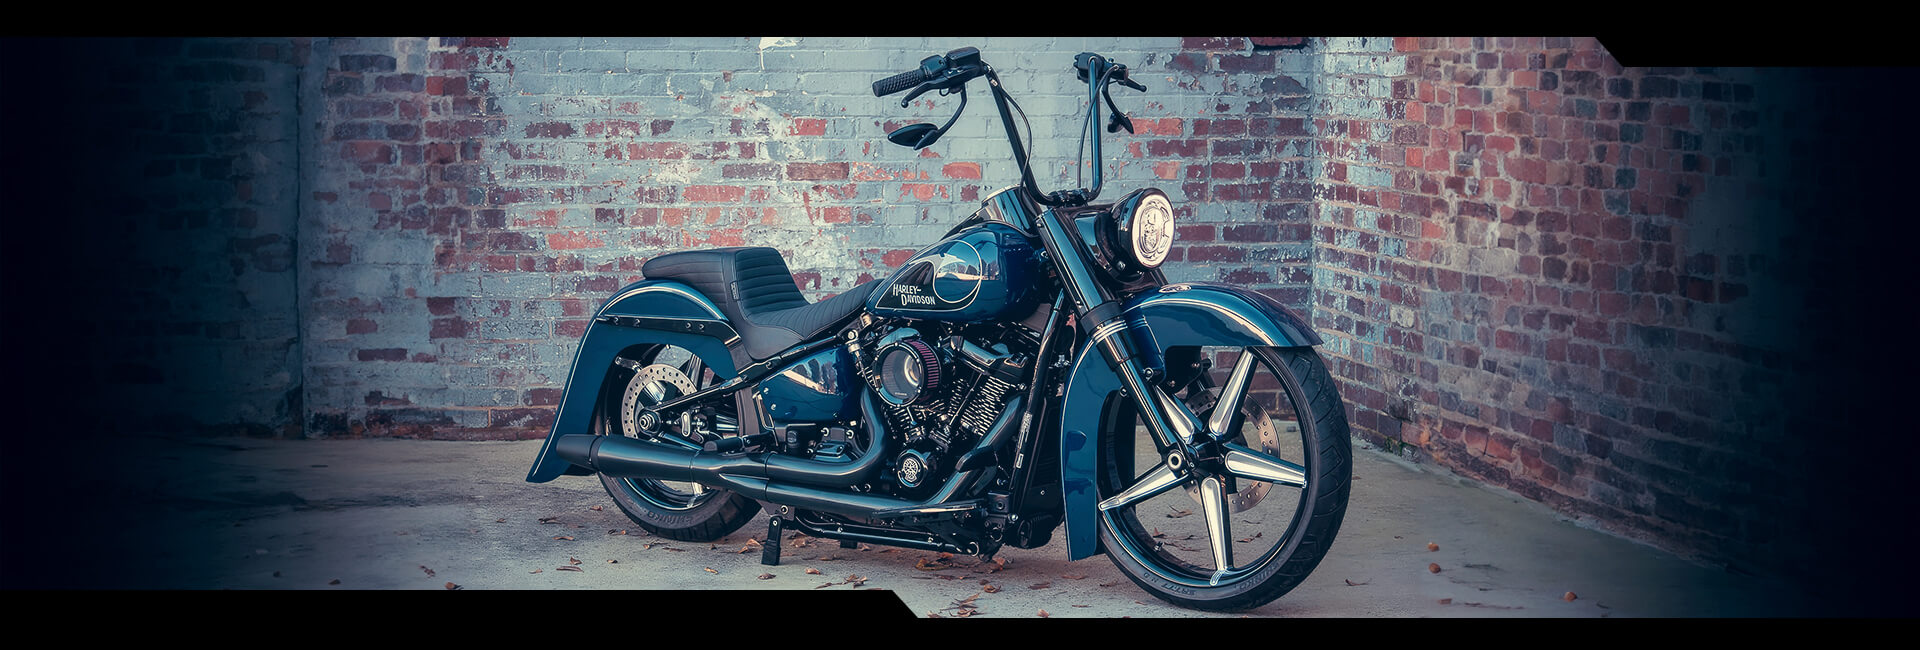 Custom Harley Heritage Wheels From SMT